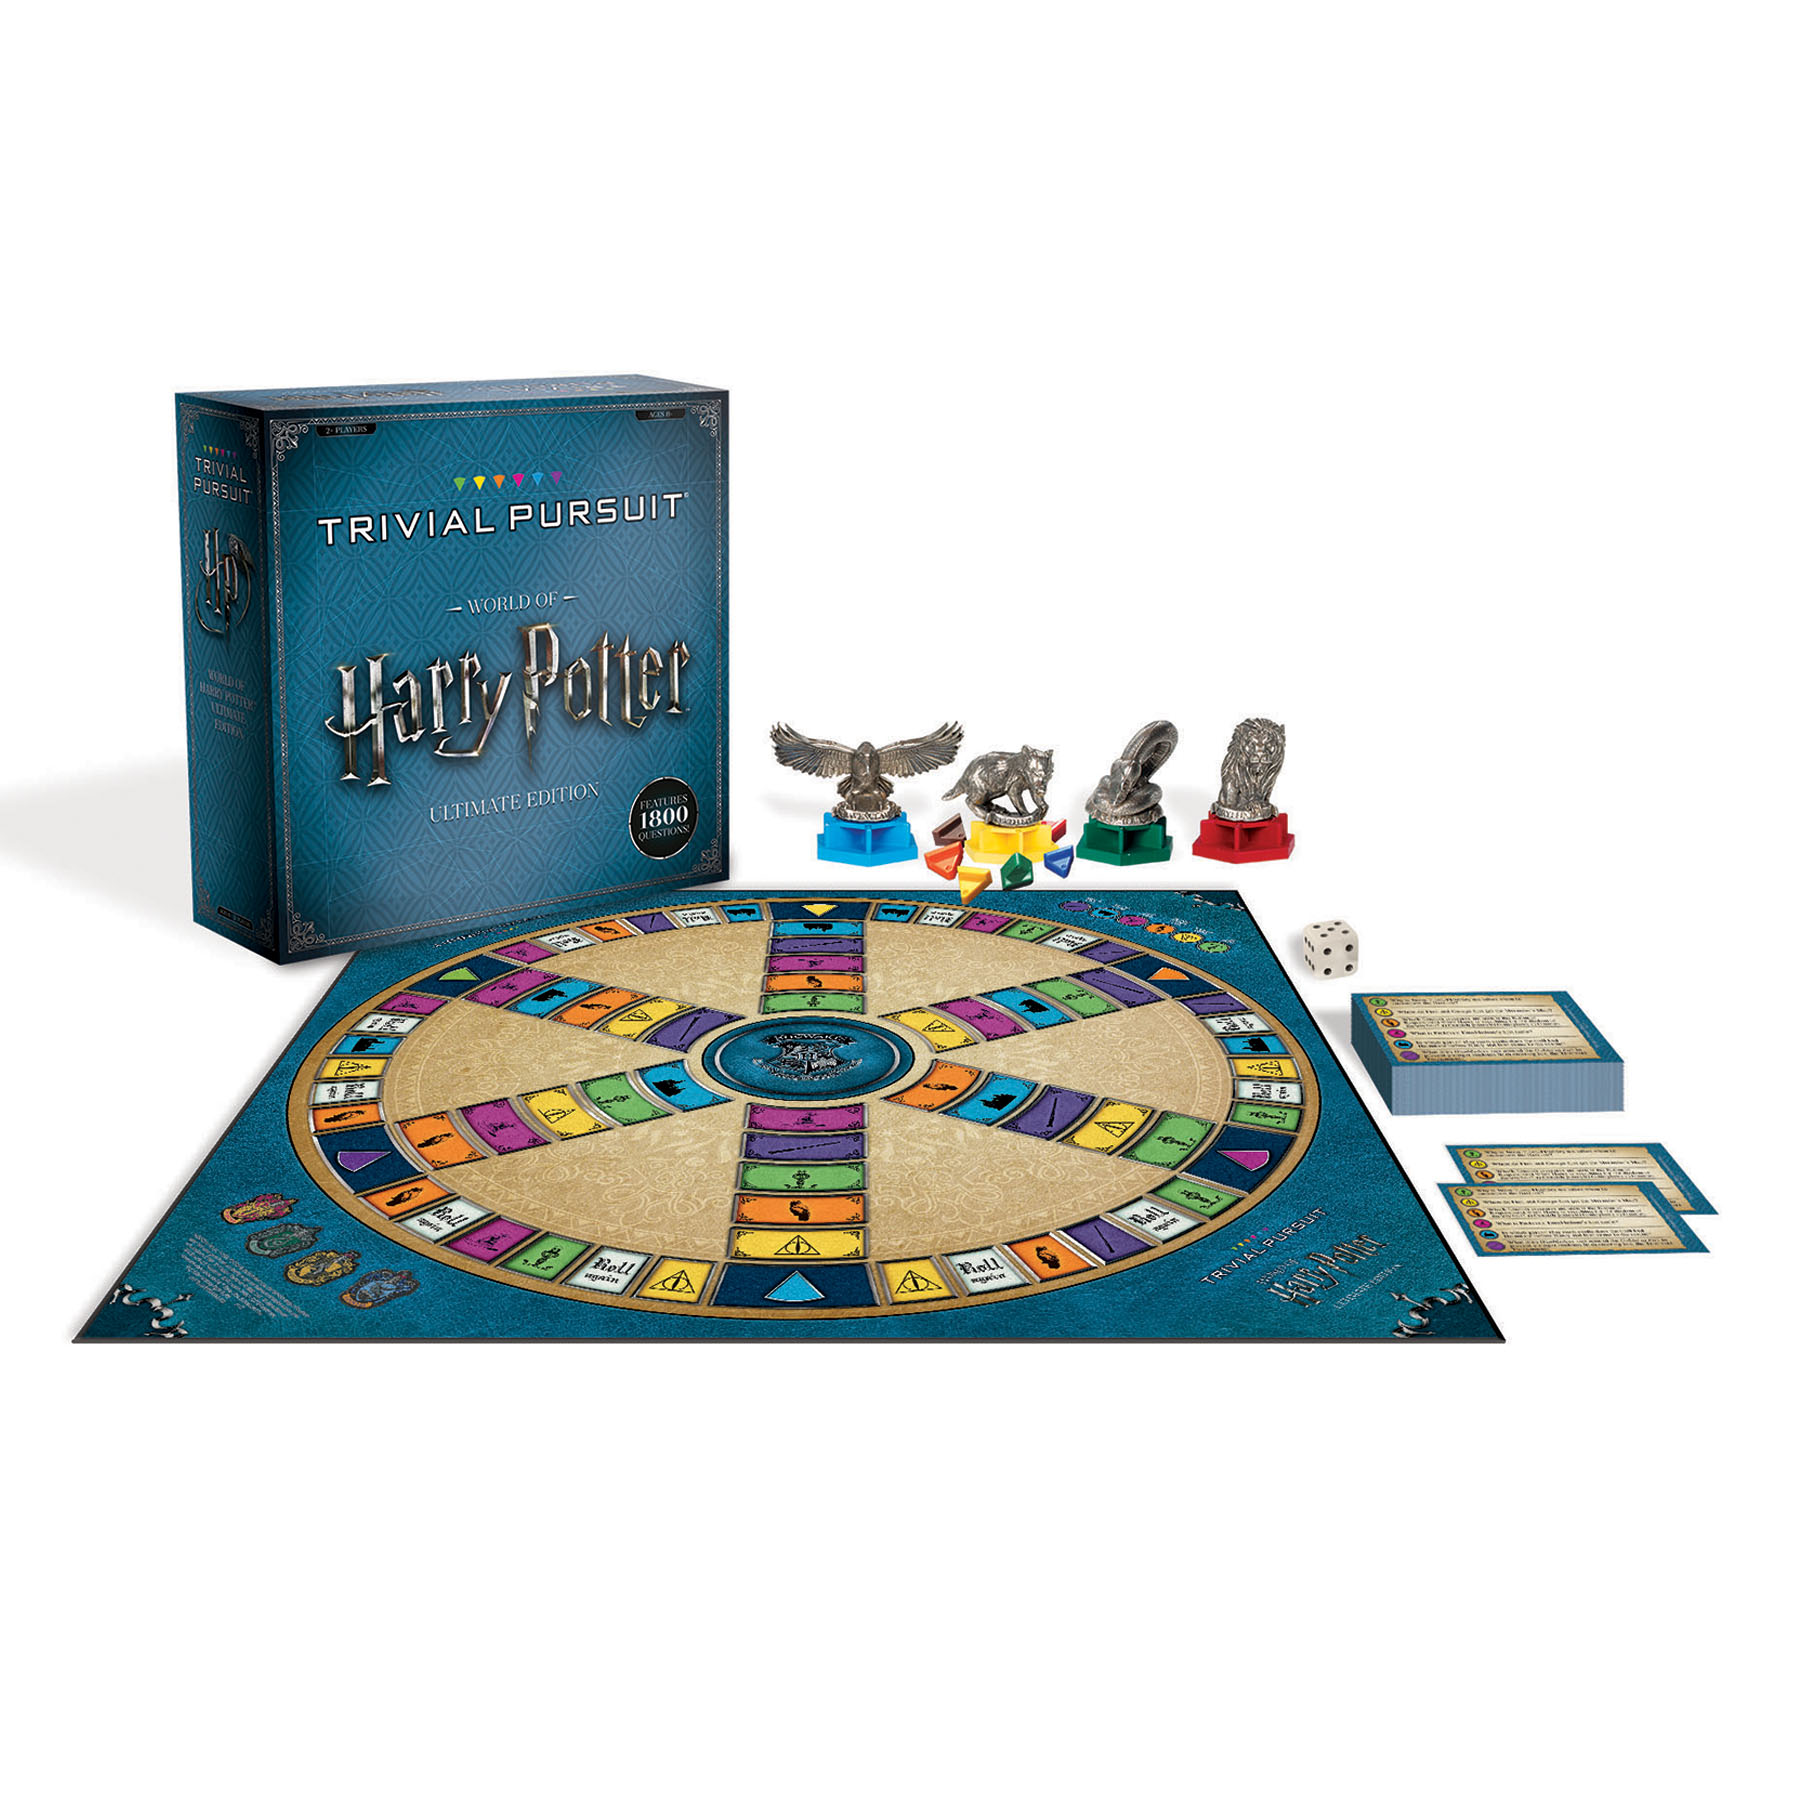 TRIVIAL PURSUIT TRIVIAL PURSUIT: World of Harry Potter Ultimate Edition